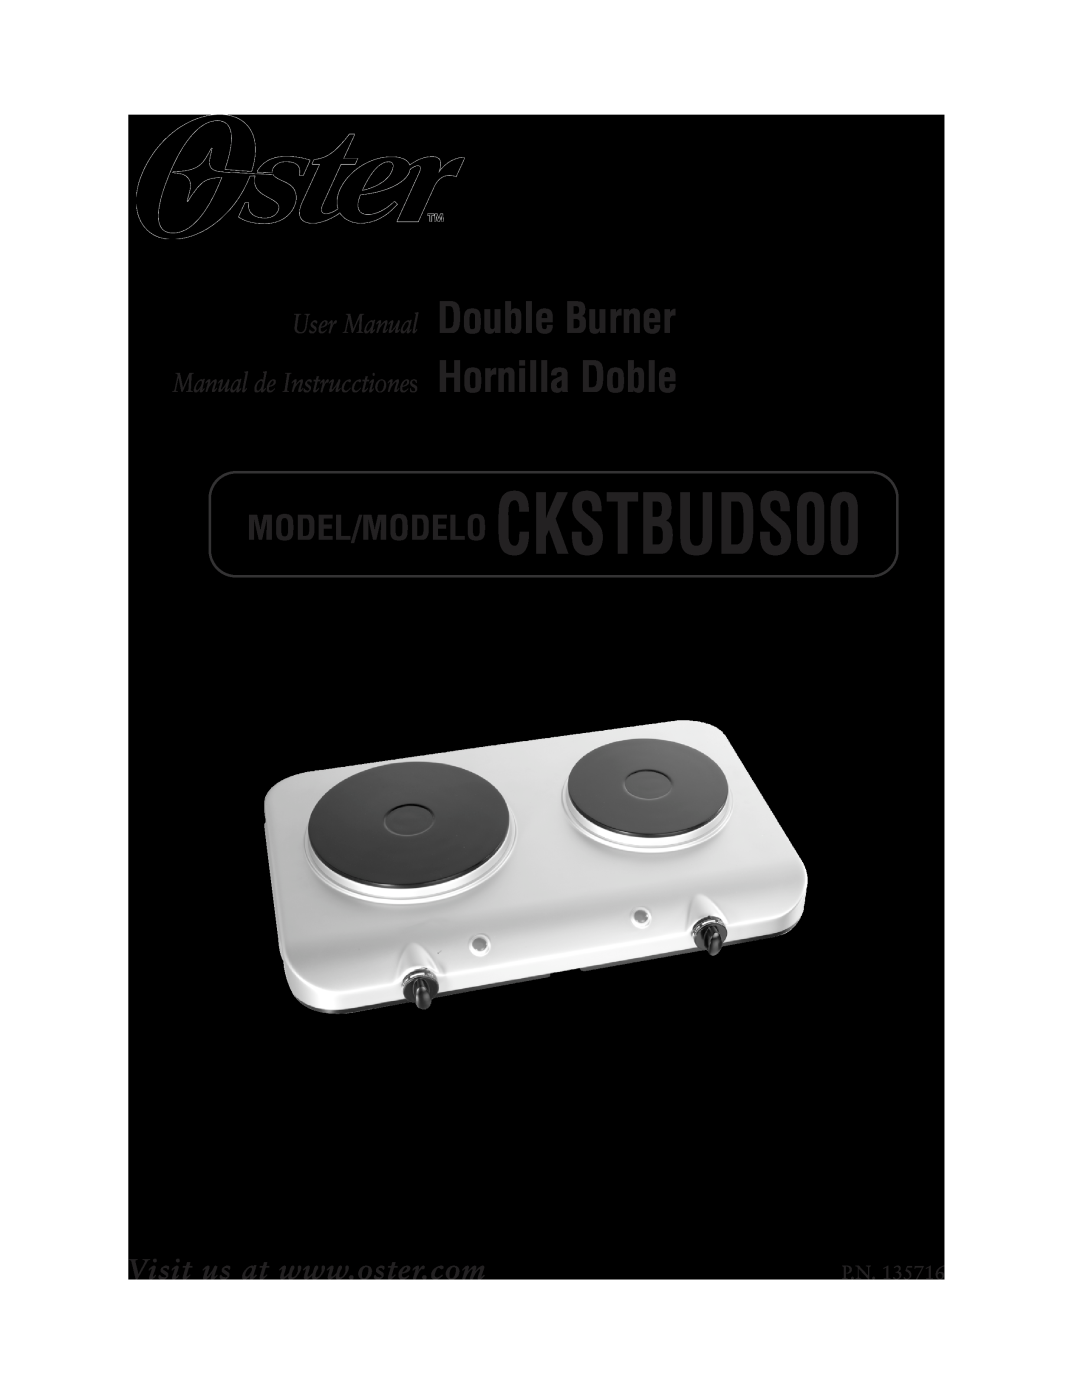 Oster user manual Double Burner Hornilla Doble, MODEL/MODELO CKSTBUDS00, Manual de Instrucctiones, P.N 